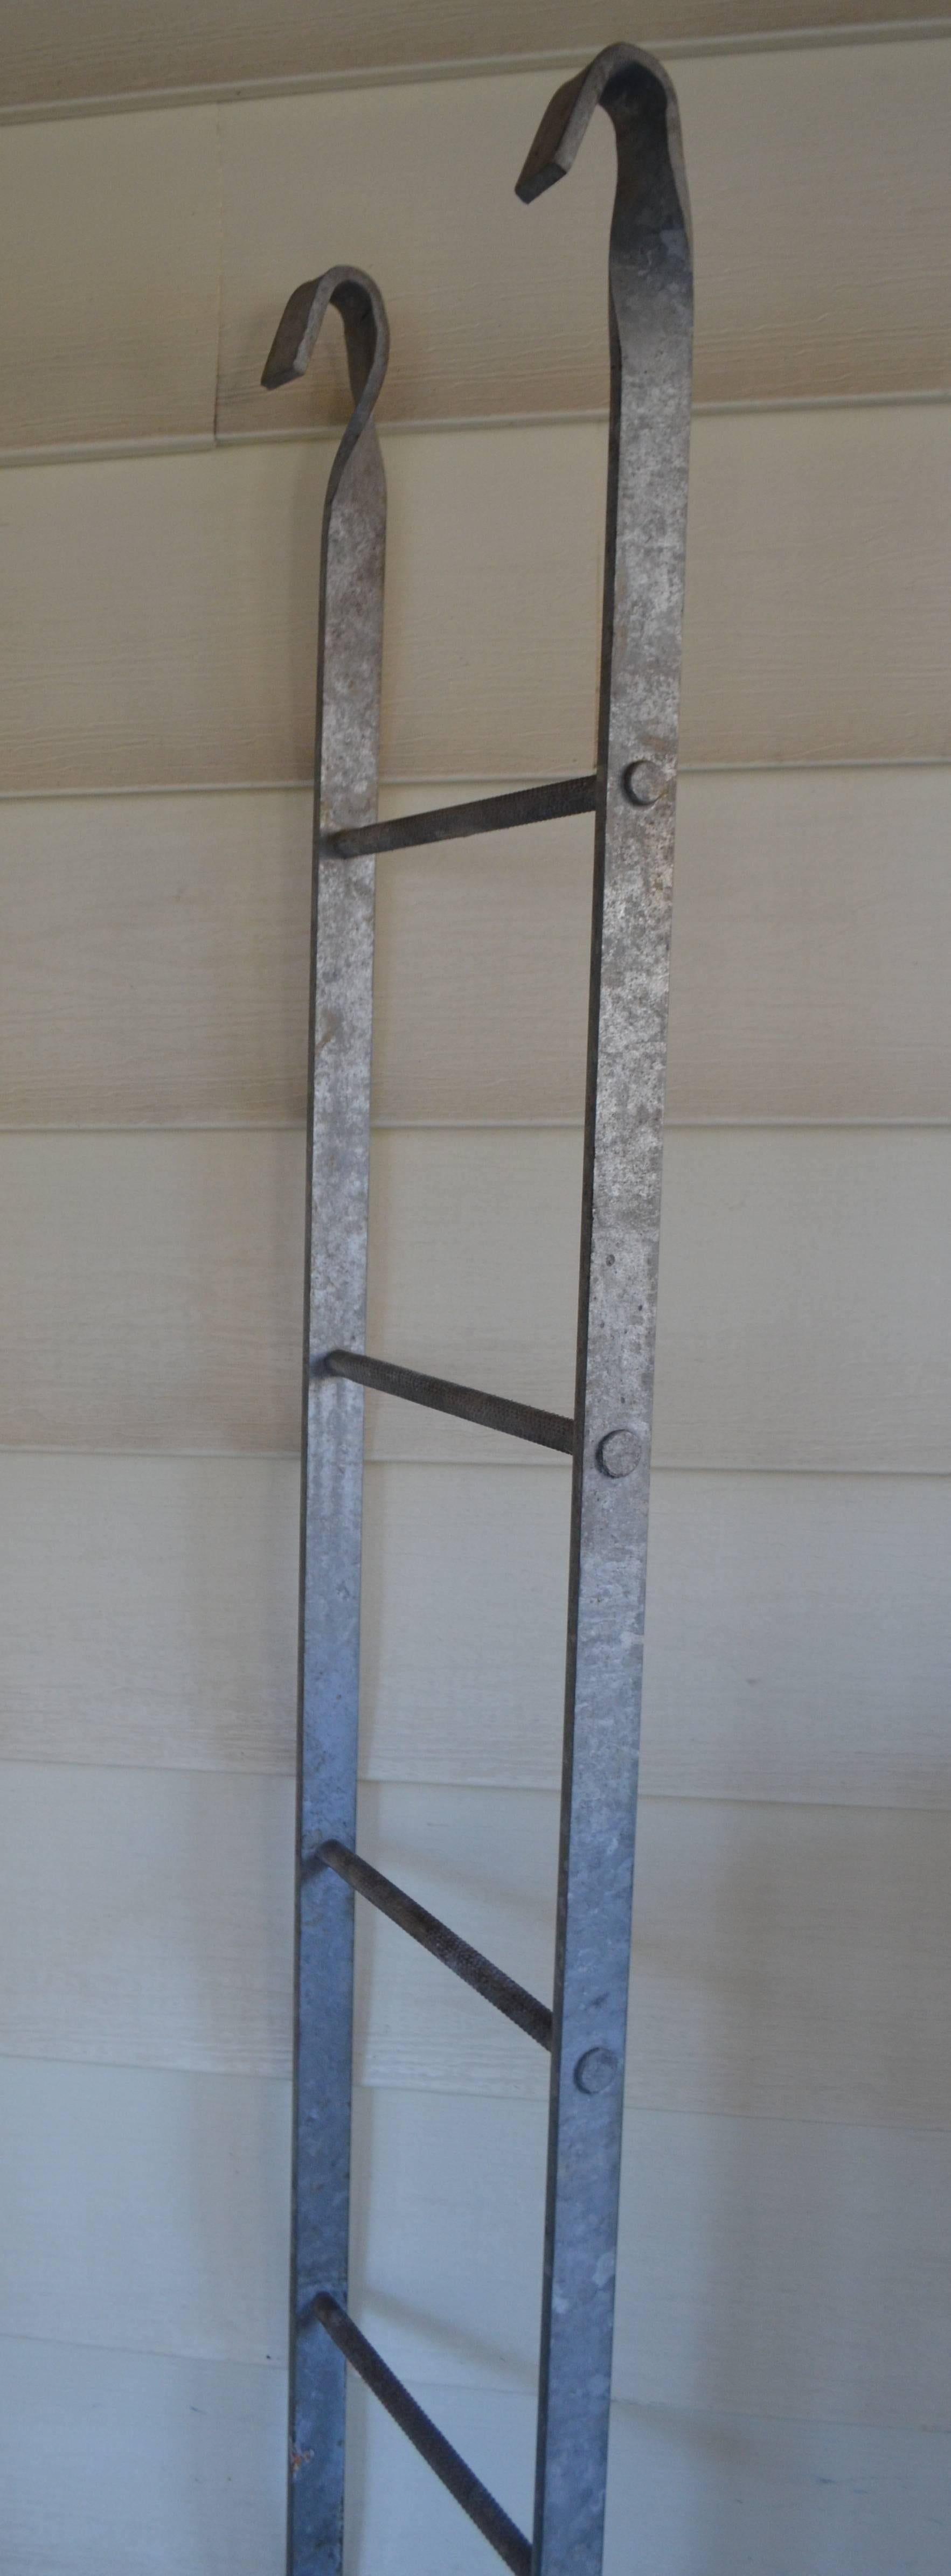 Vintage Galvanized Steel Ladder as Plant Trellis or Sculptural Wall Art 1